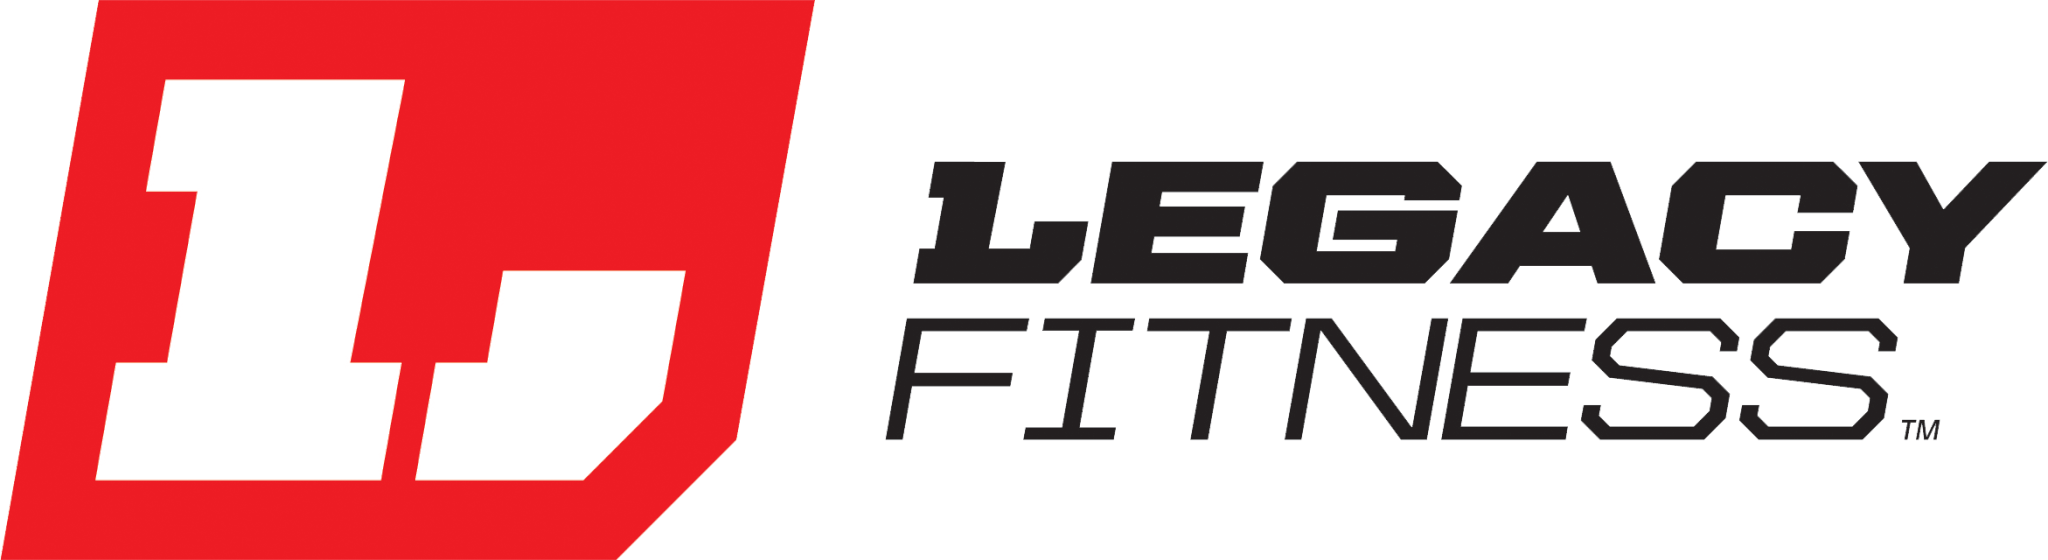 http://legacyfitness1.com/wp-content/uploads/2016/11/legacy-fitness-logo.png